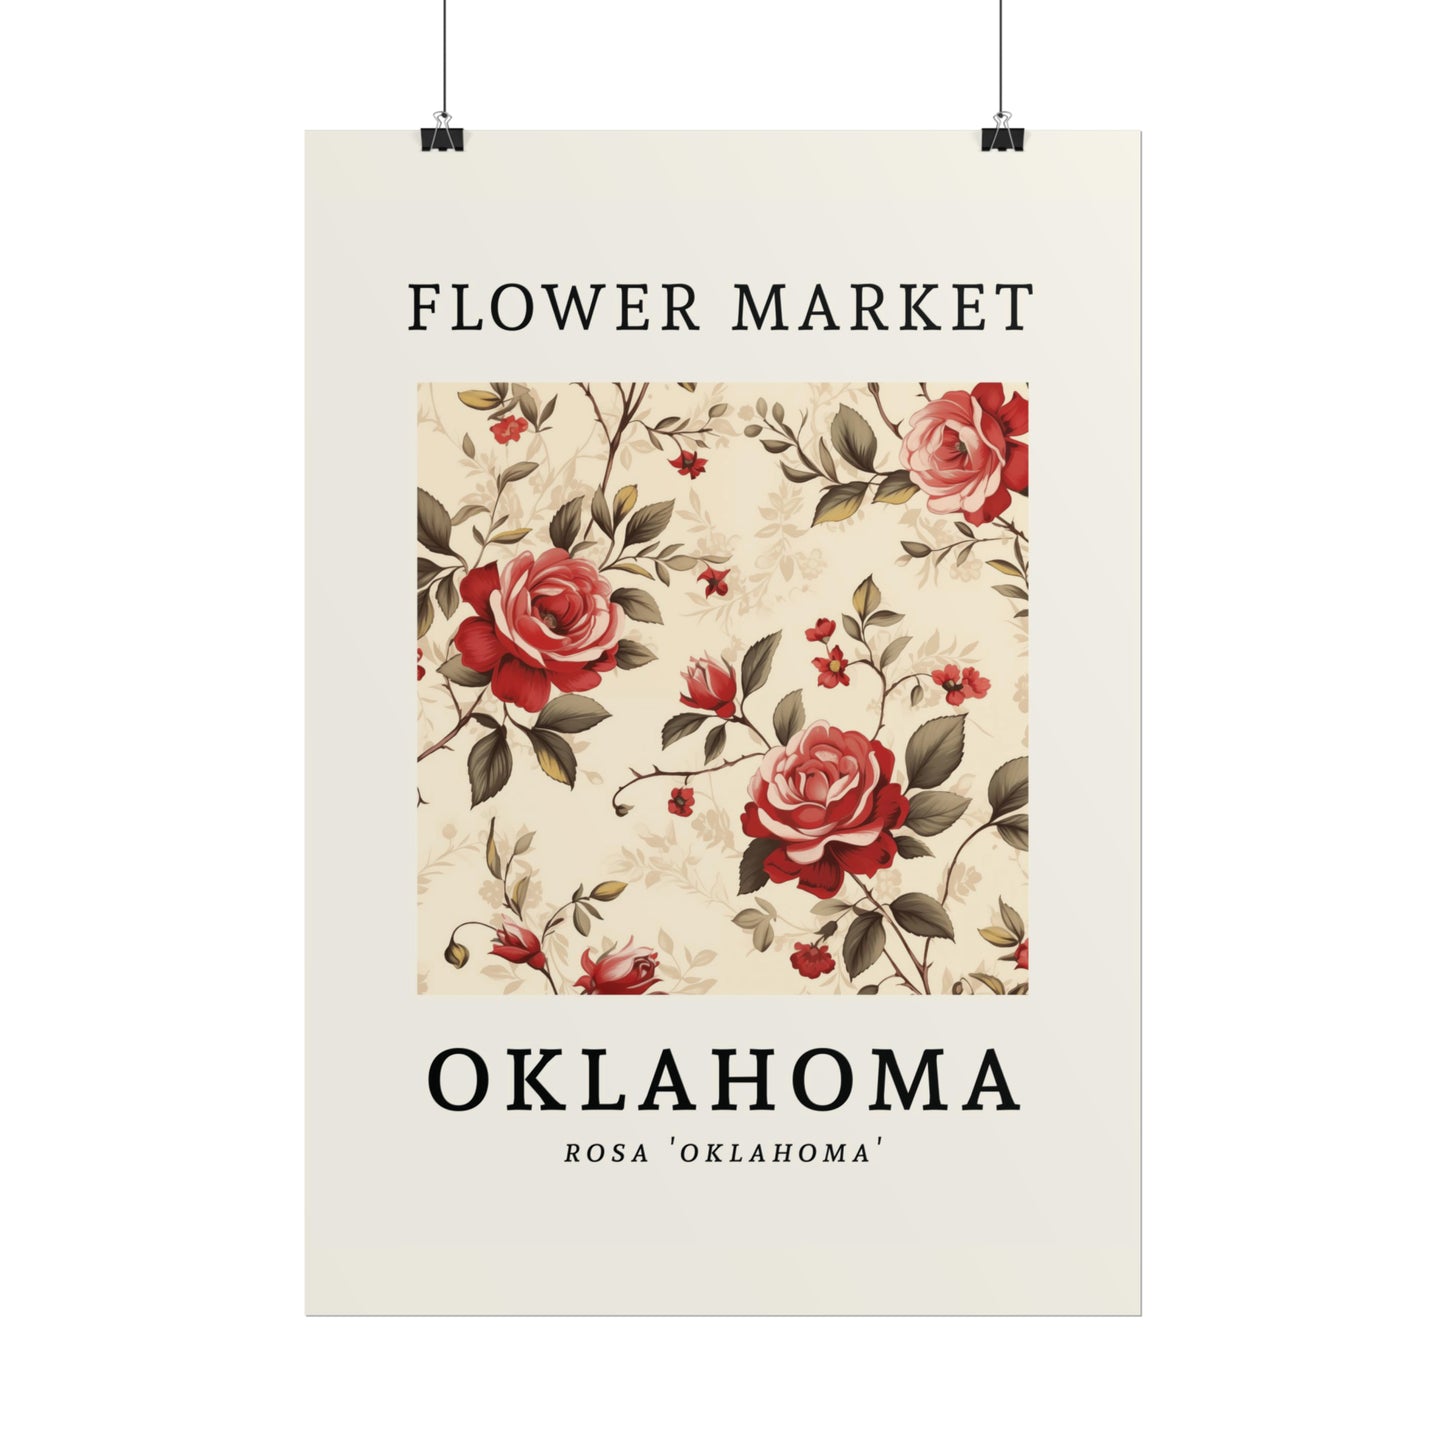 OKLAHOMA FLOWER MARKET Poster Oklahoma Rose Blossoms Print